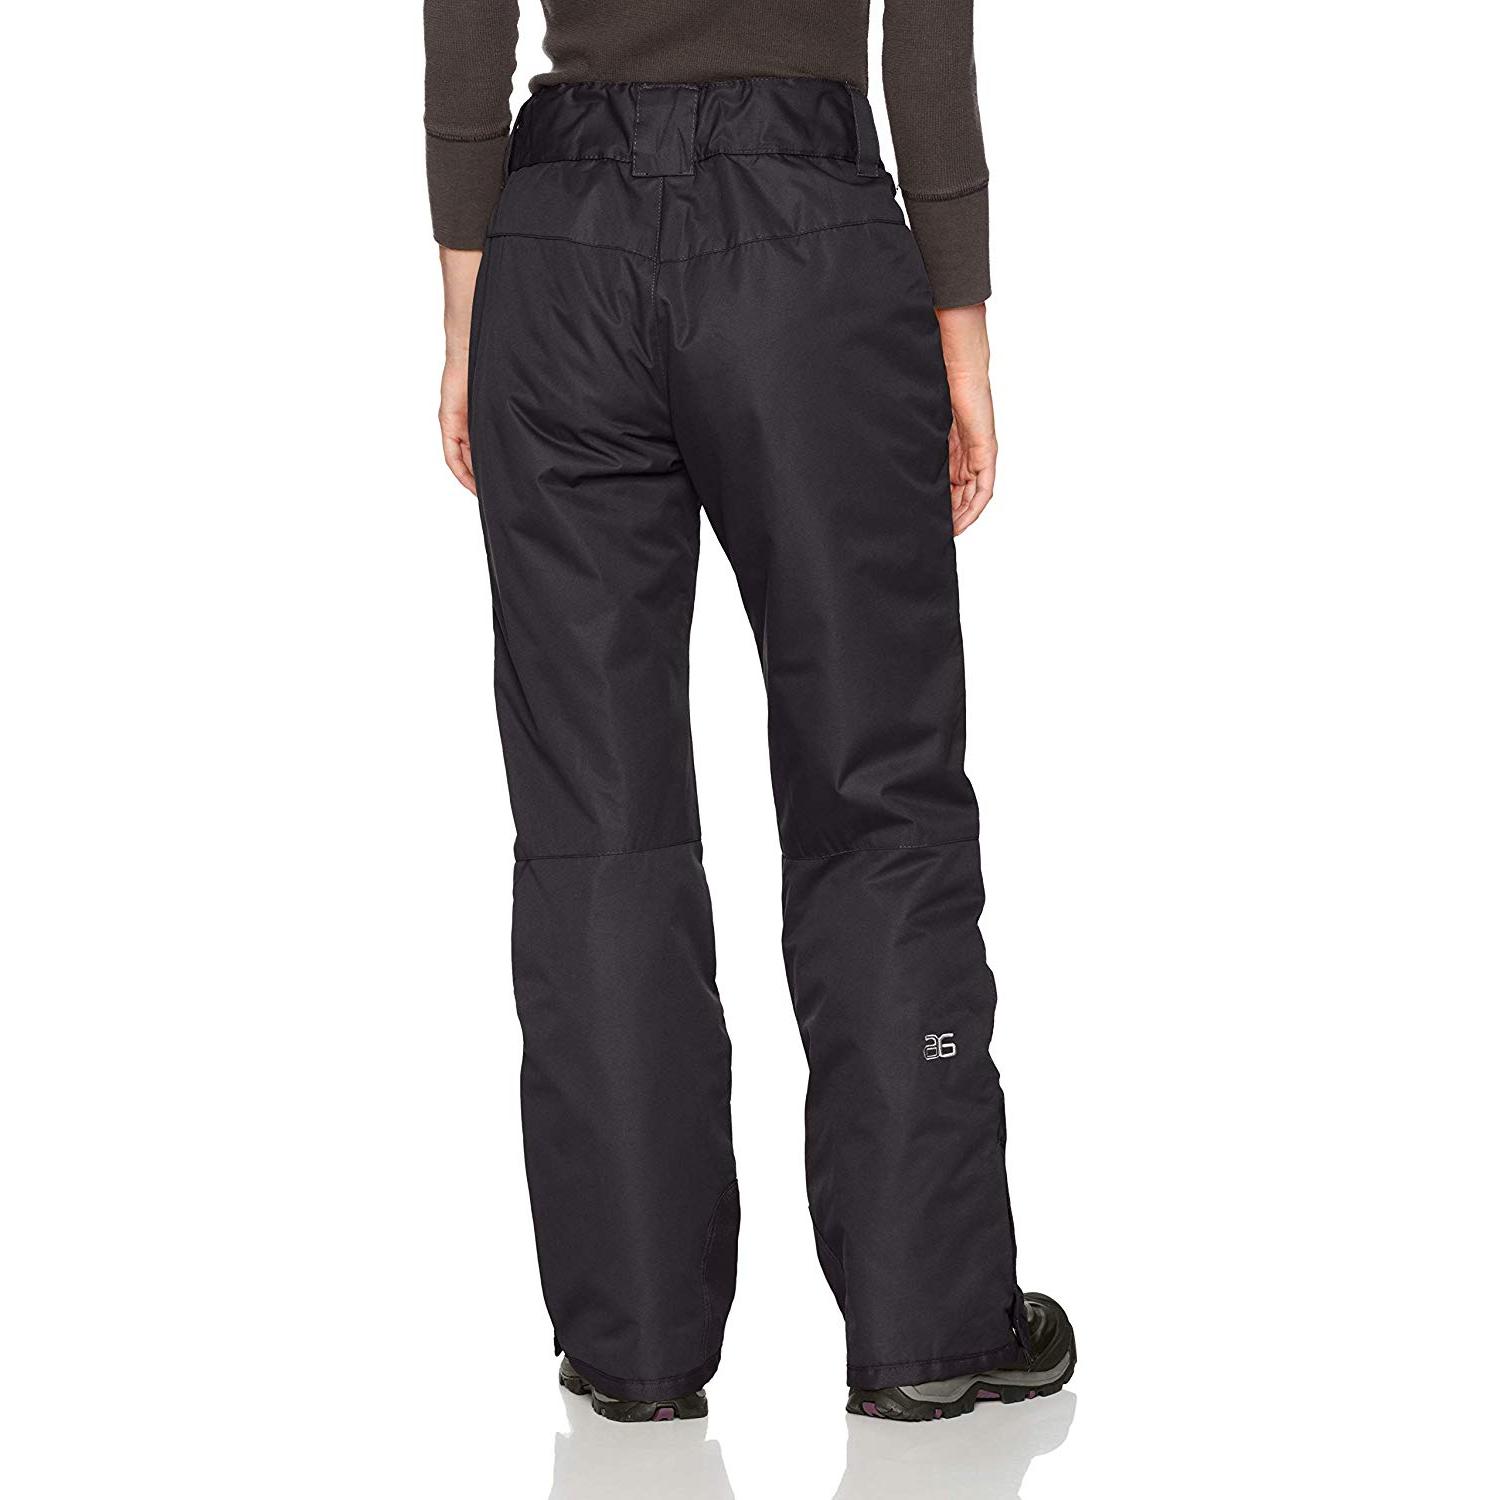 ARCTIX Women's Waterproof Insulated Ski Snow Pants Snowboard 5k Black Size  L for sale online